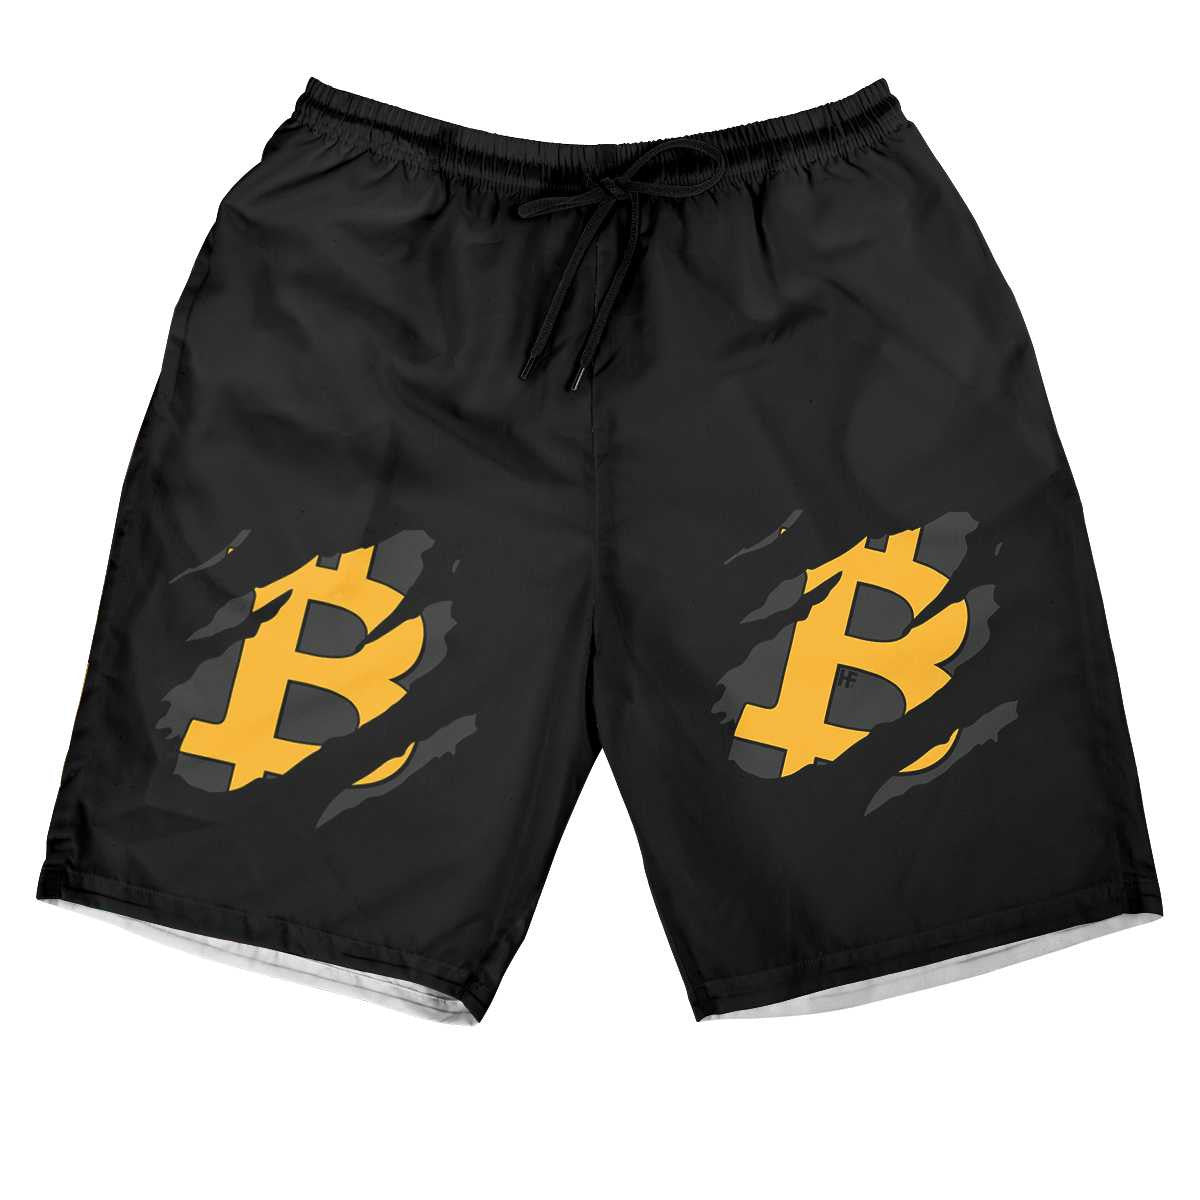 Bitcoin Symbol Beach Shorts For Men, Bitcoin Print Shorts For Guys, Funny Bitcoin Gift For Men